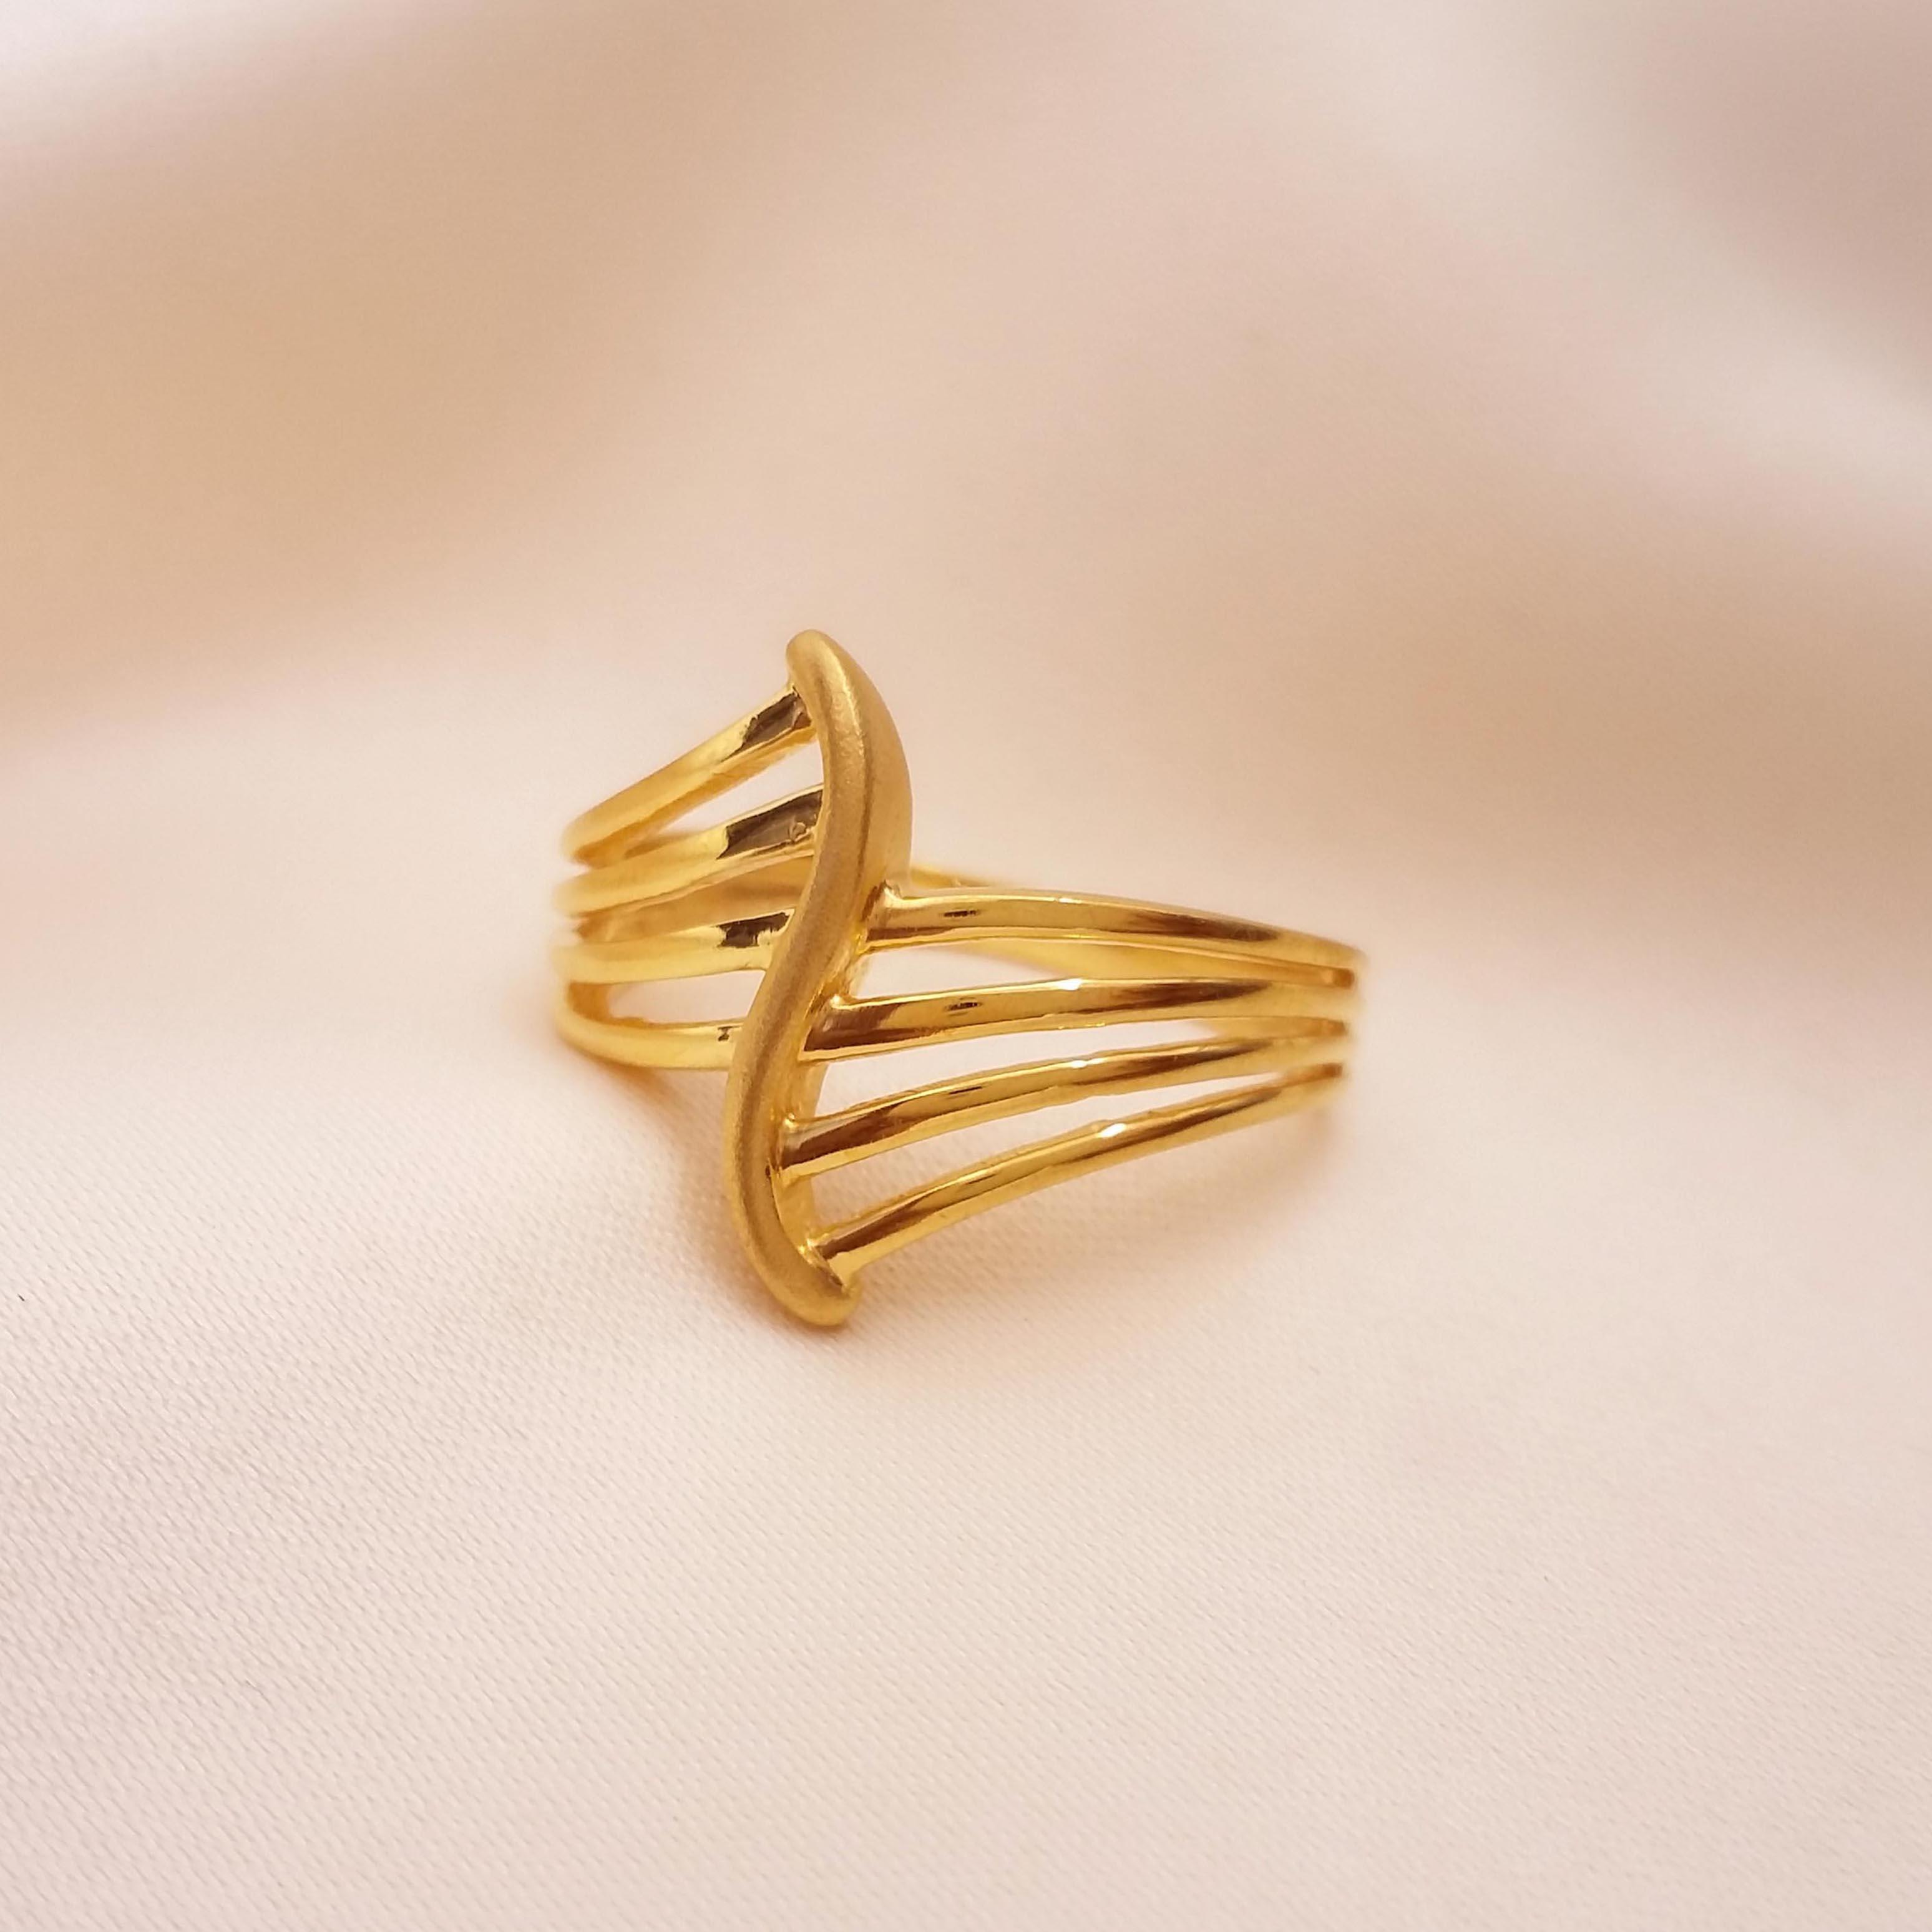 22 Carat Ladies Gold Ring, 4 Gm Load Capacity: 100 - 10000 Kilograms (kg)  at Best Price in New Delhi | Sharwan Kumar Shahmal Jewellers